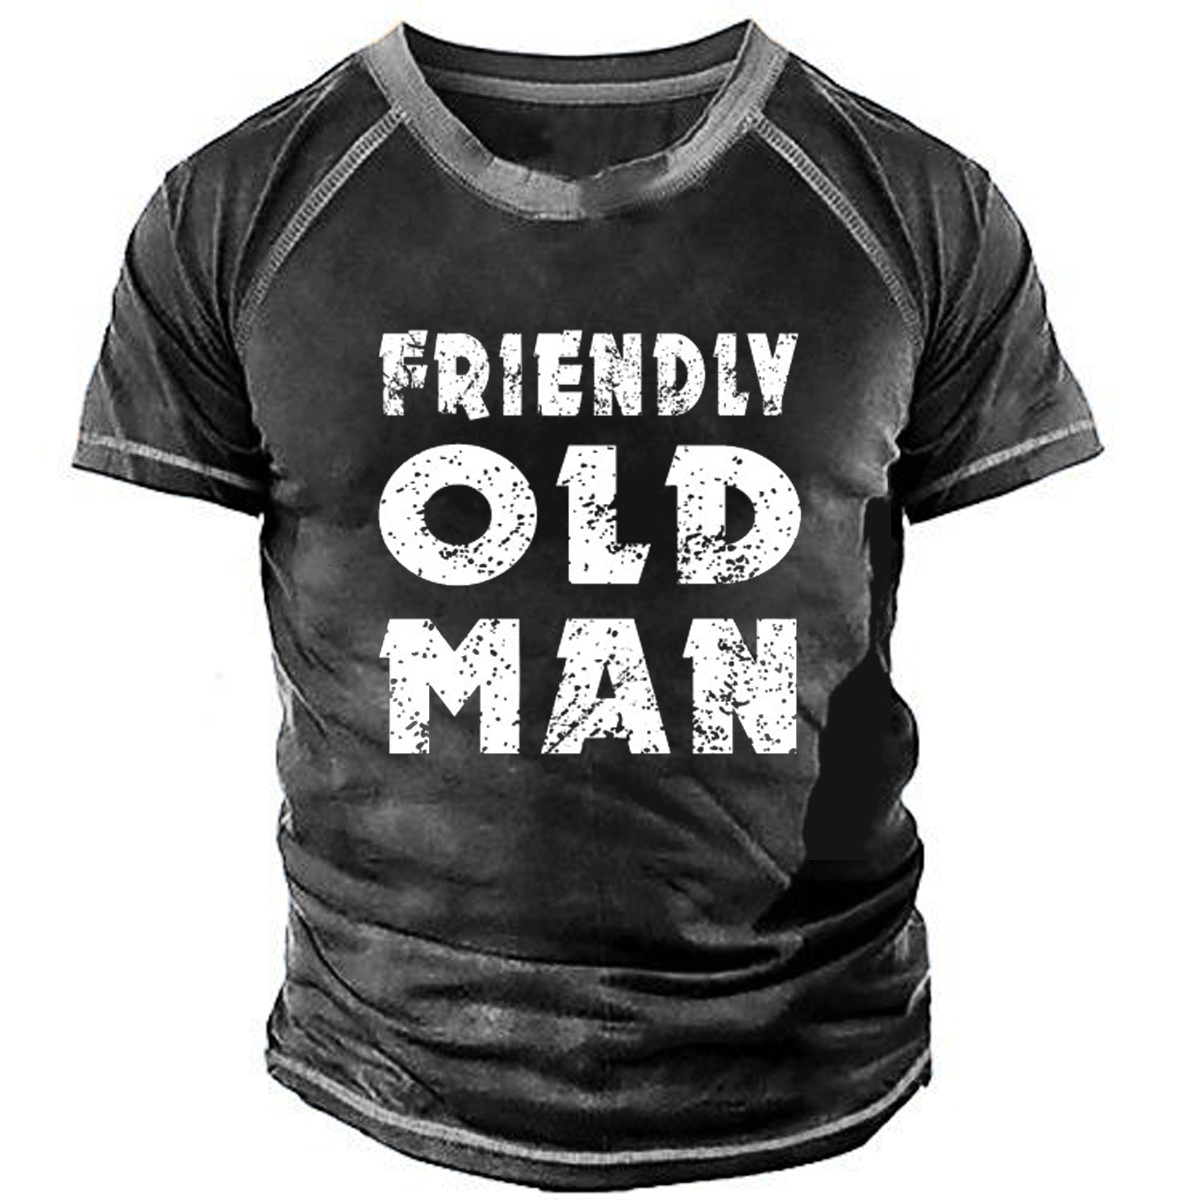 Men's Vintage Old Man Chic Round Neck Short Sleeve T-shirt